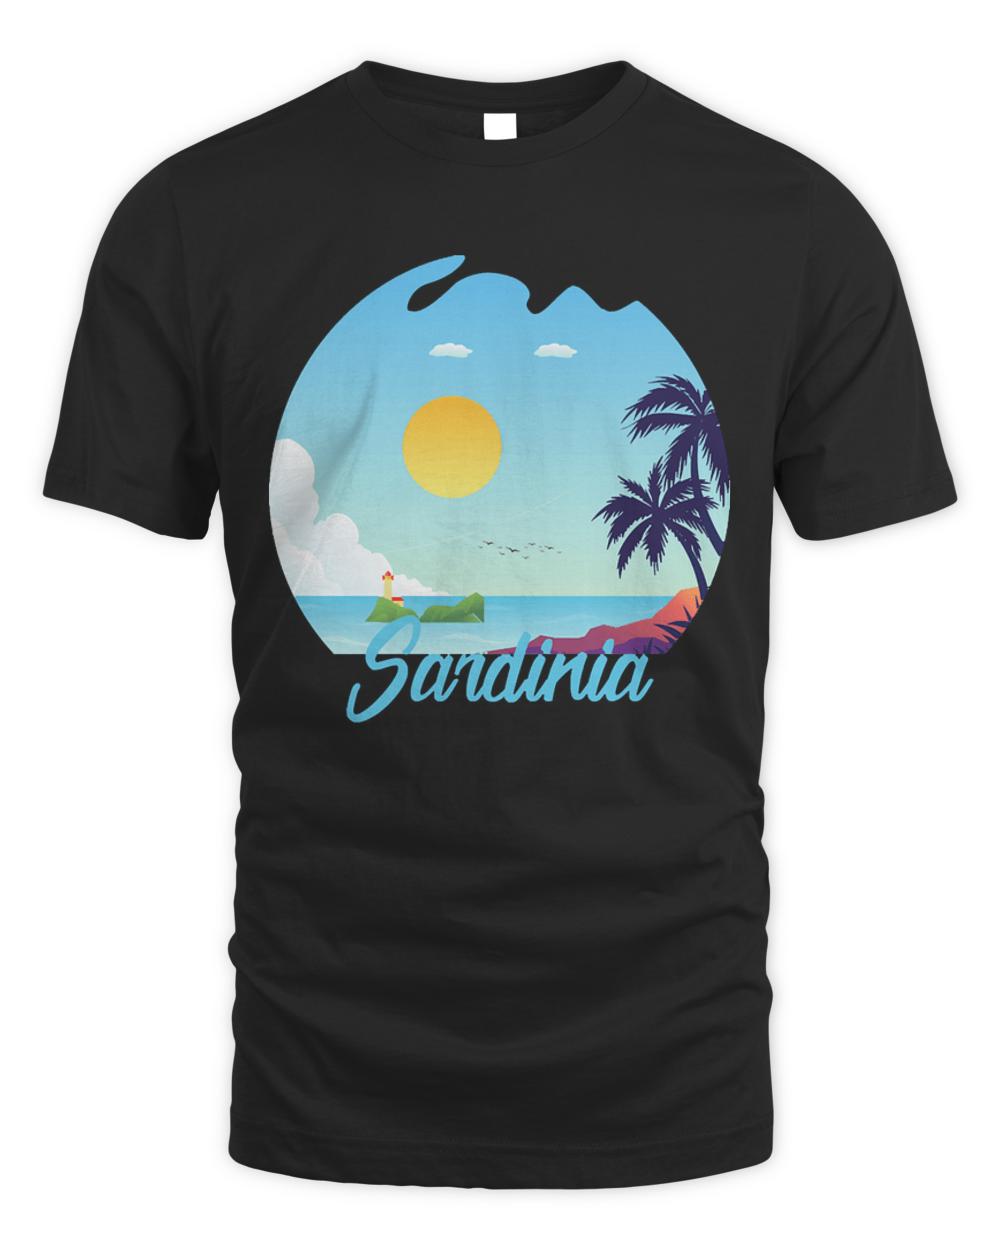 Sardinia T- Shirt No place like Sardinia T- Shirt